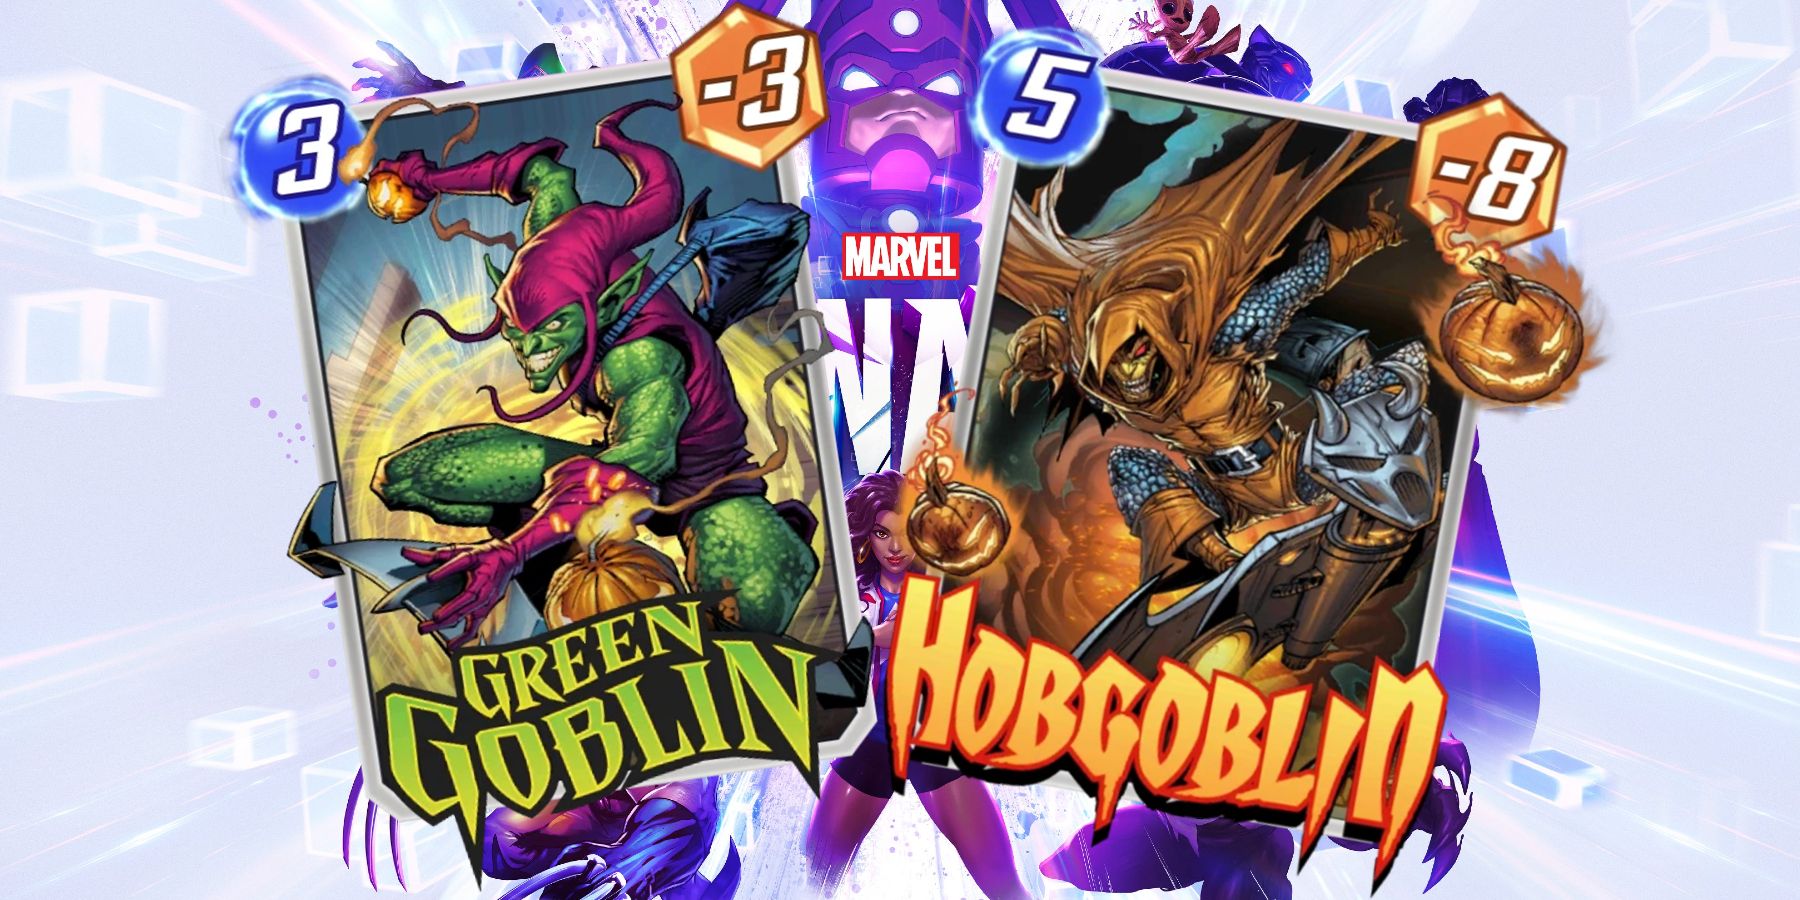 Grand Master - Marvel Snap Cards